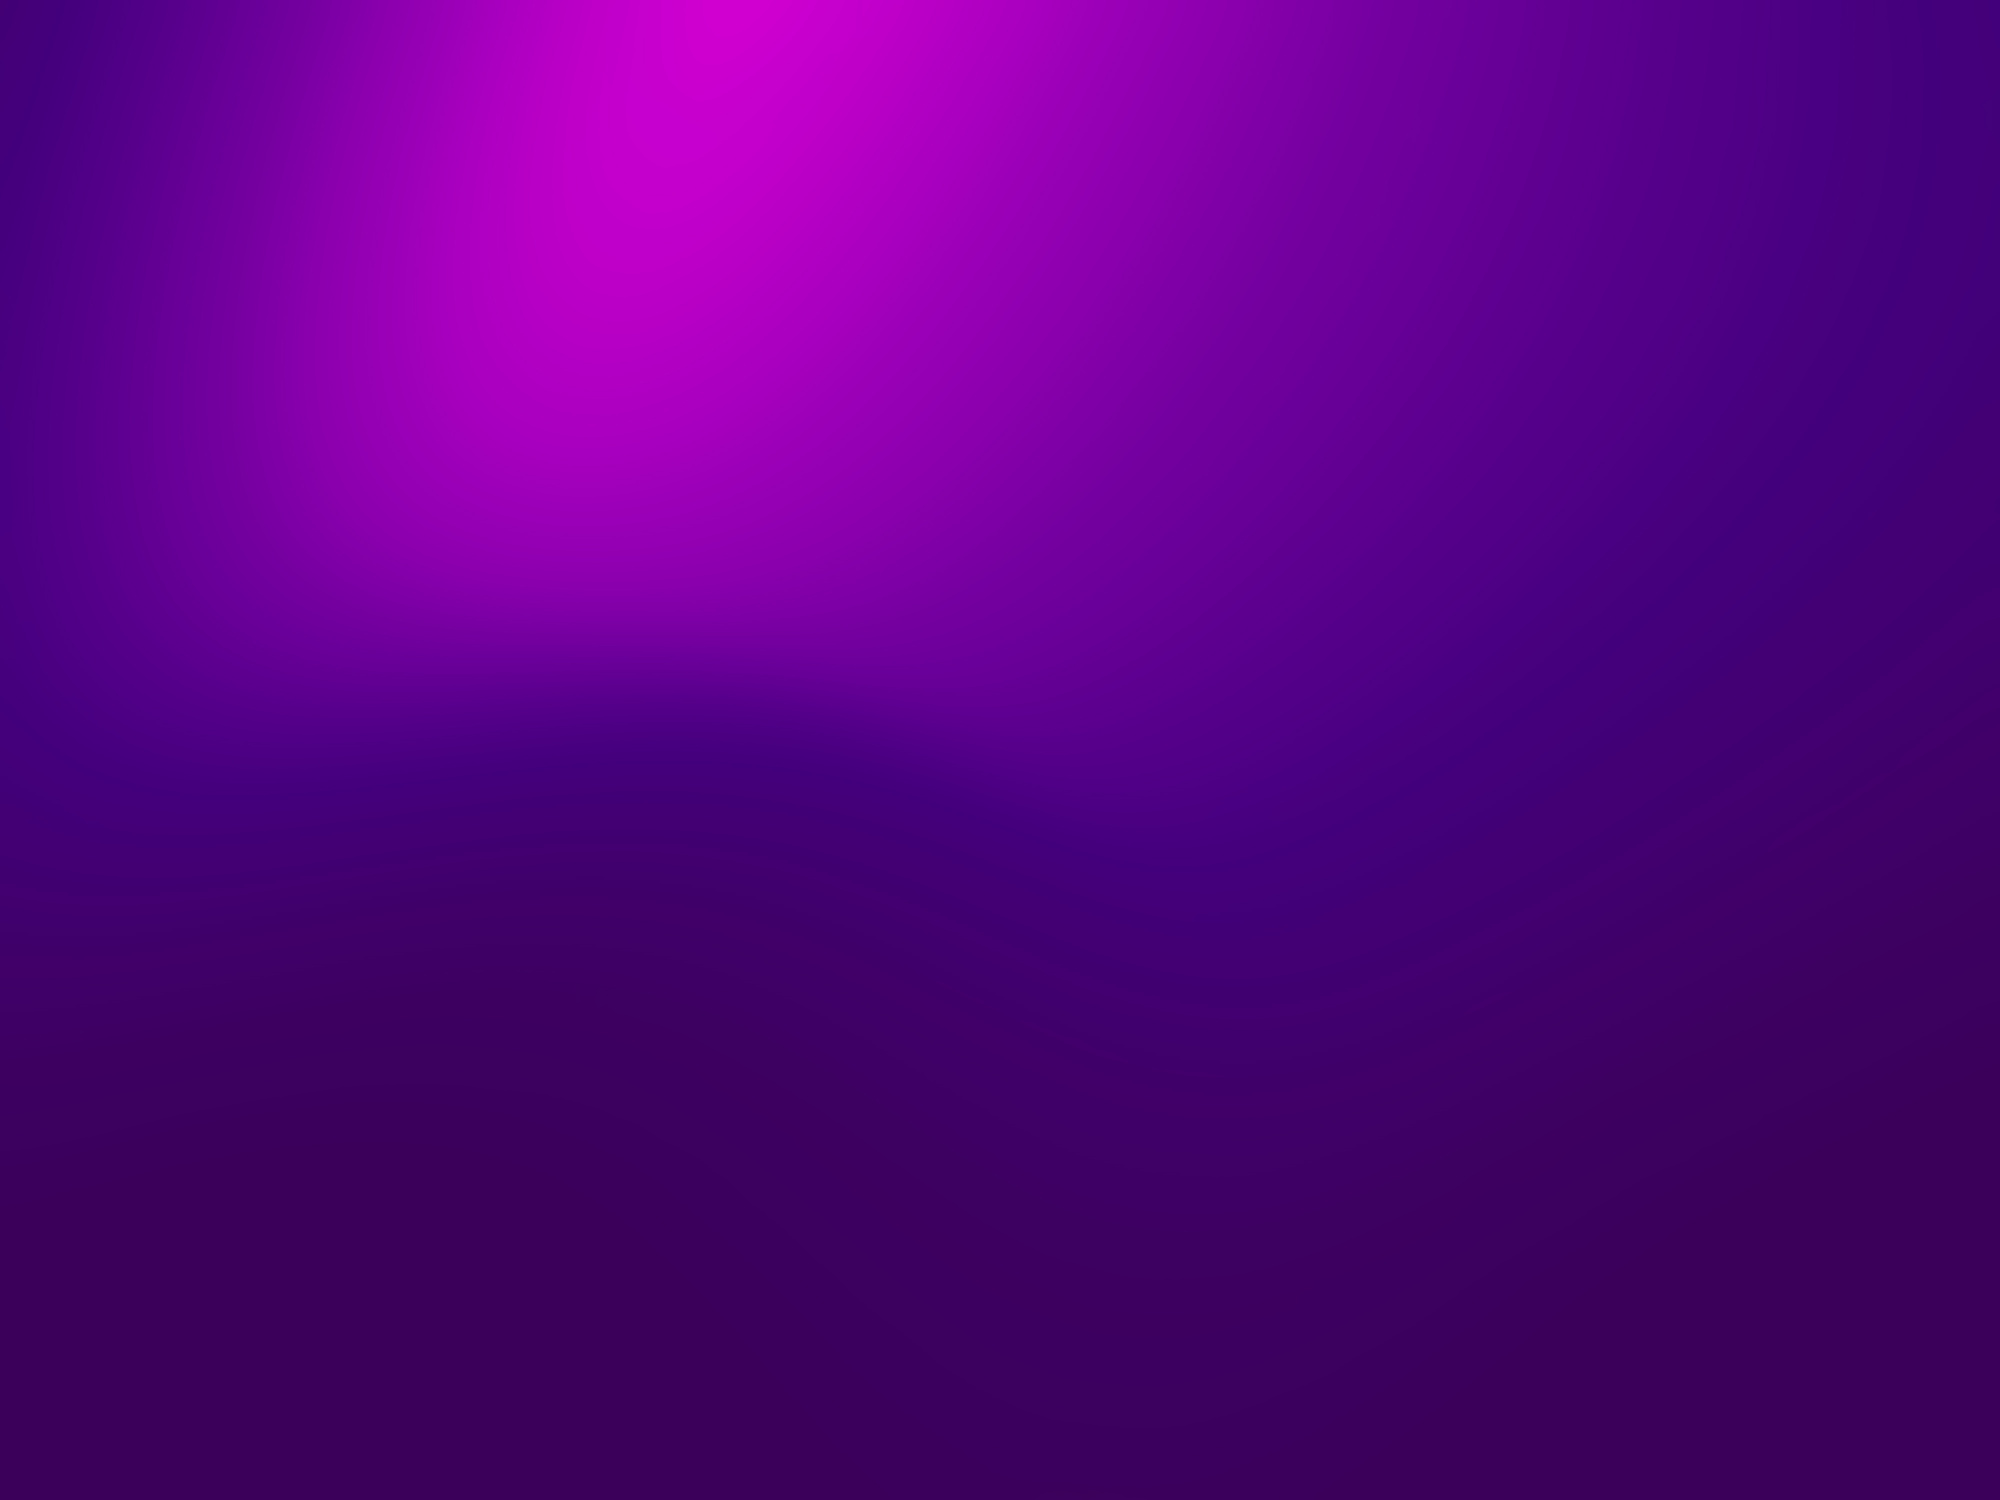 Background studio room purple gradient